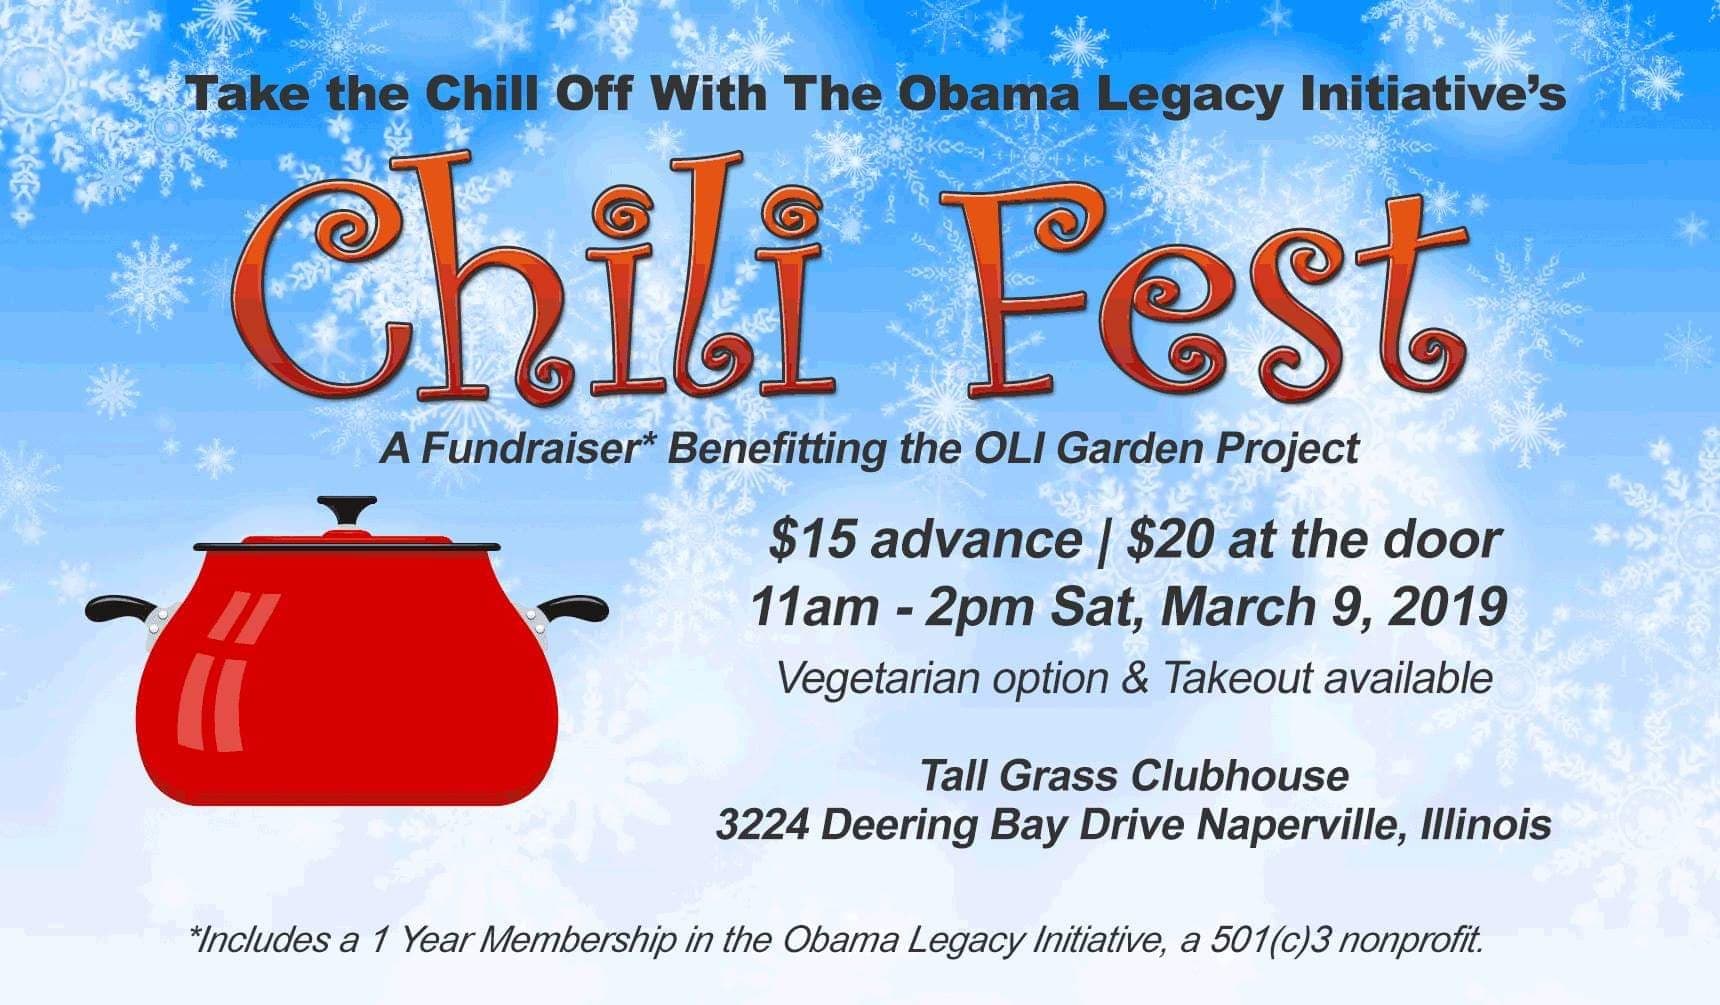 Obama Legacy Initiative's Chili Fest